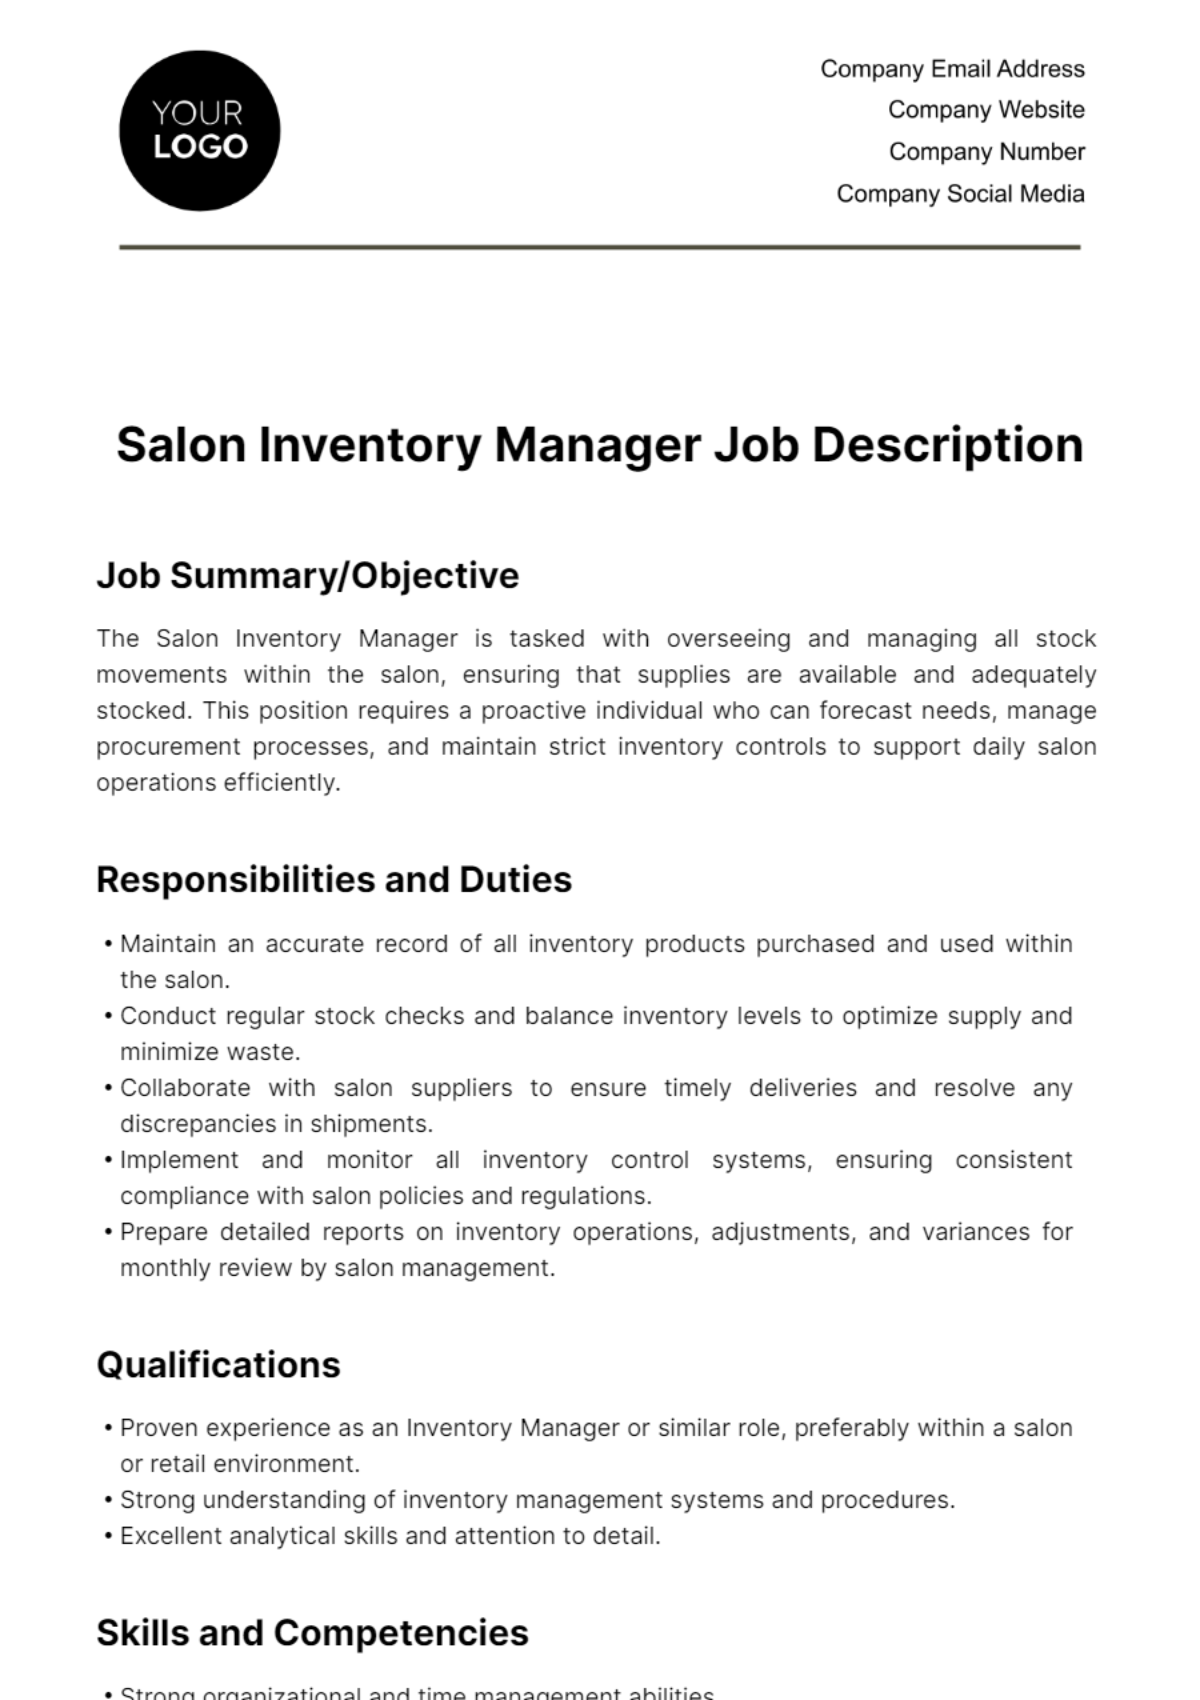 Salon Inventory Manager Job Description Template